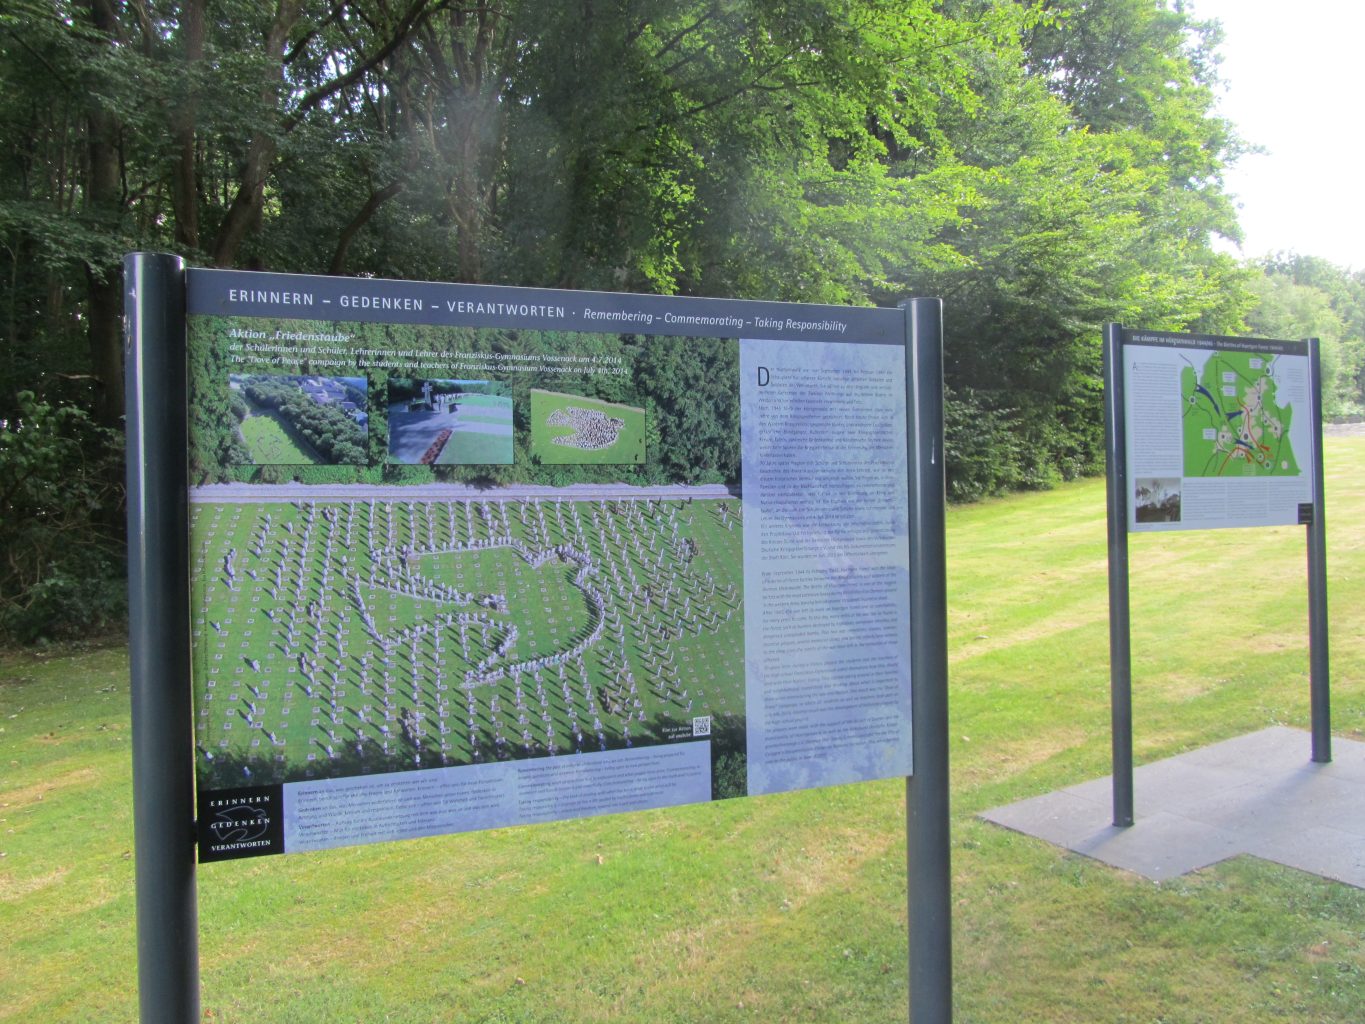 Soldatenfriedhof Vossenack Info-Tafeln